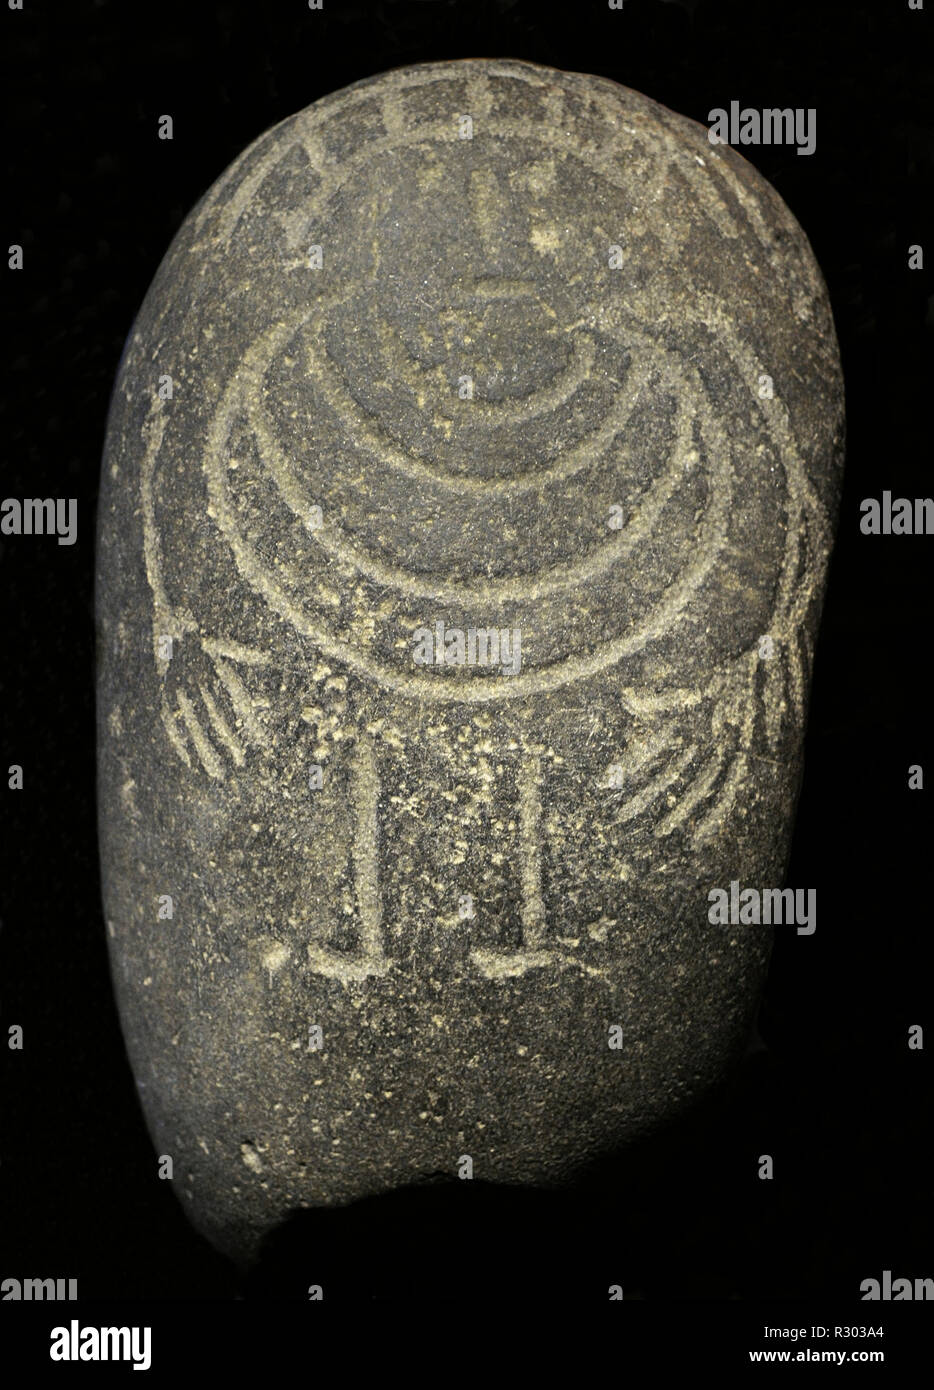 Idol of Ciudad Rodrigo. Basalt. 2000-1500 BC. Ancient-Middle Bronze Age. From Ciudad Rodrigo (province of Salamanca, Castile and Leon), Spain. National Archaeological Museum. Madrid. Spain. Stock Photo